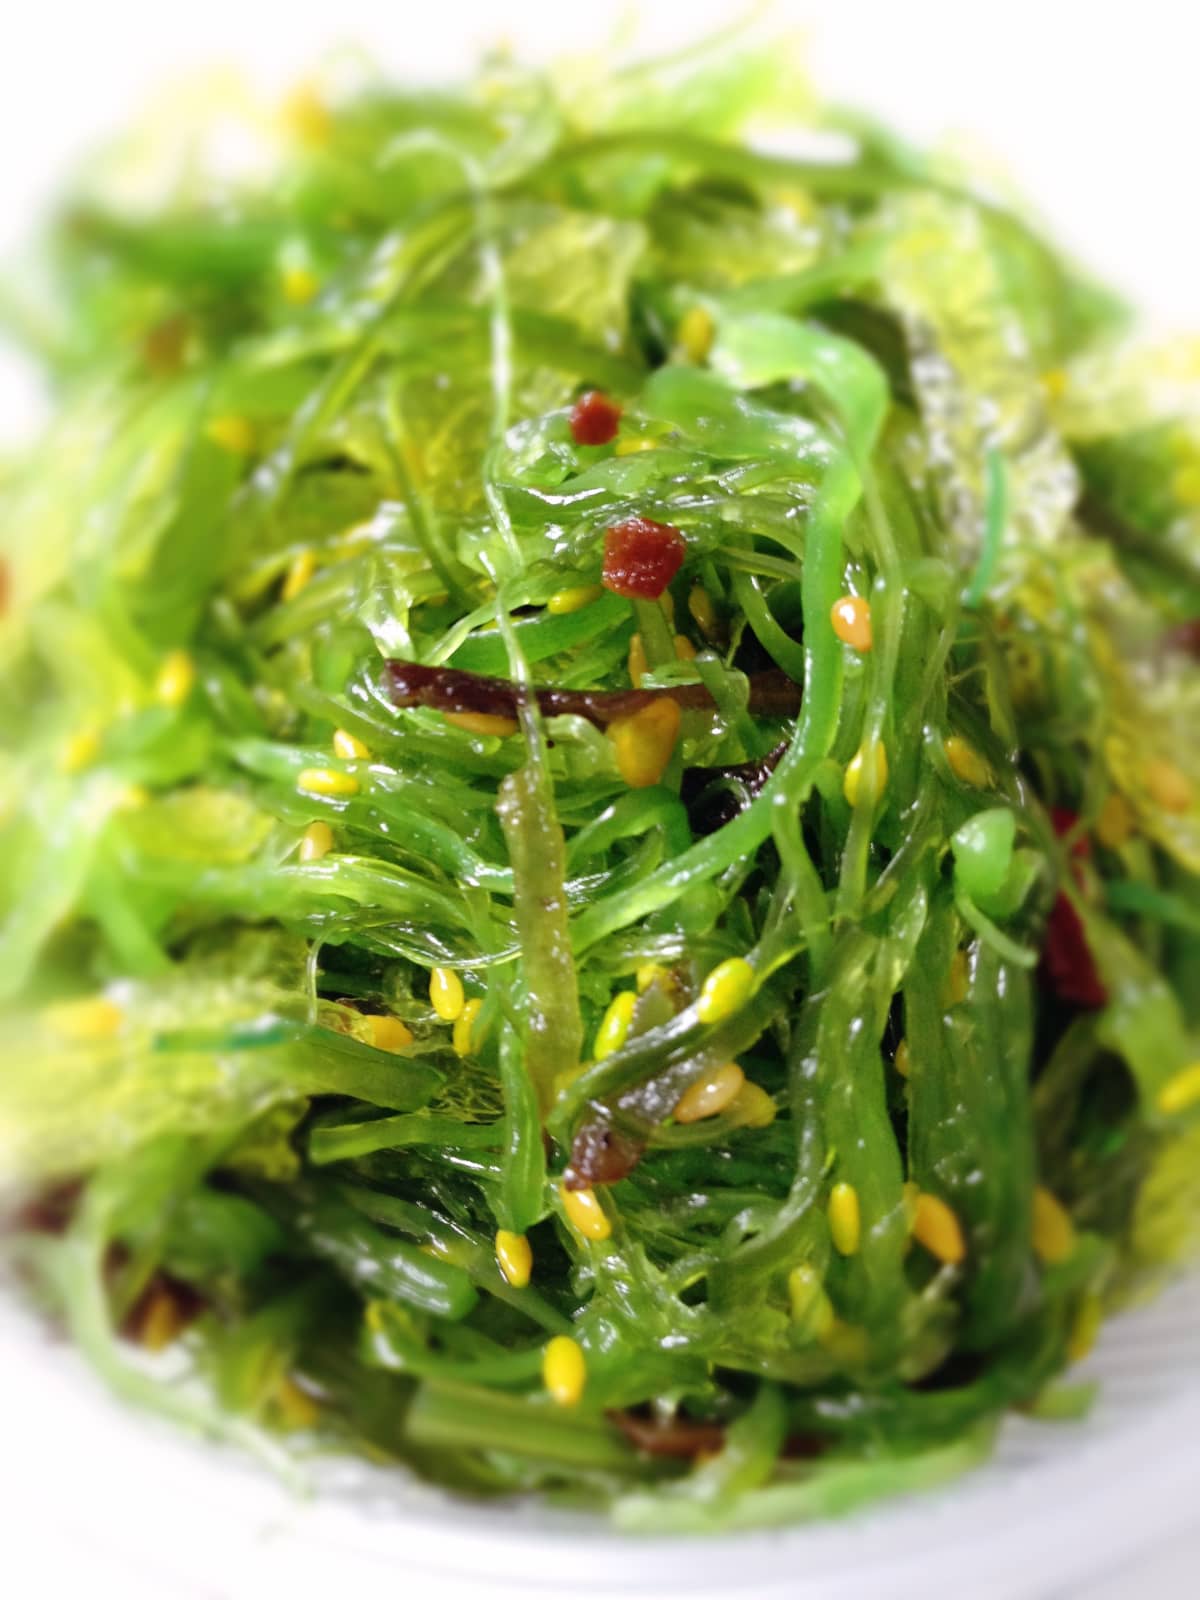 Goma Wakame (Seaweed Salad)